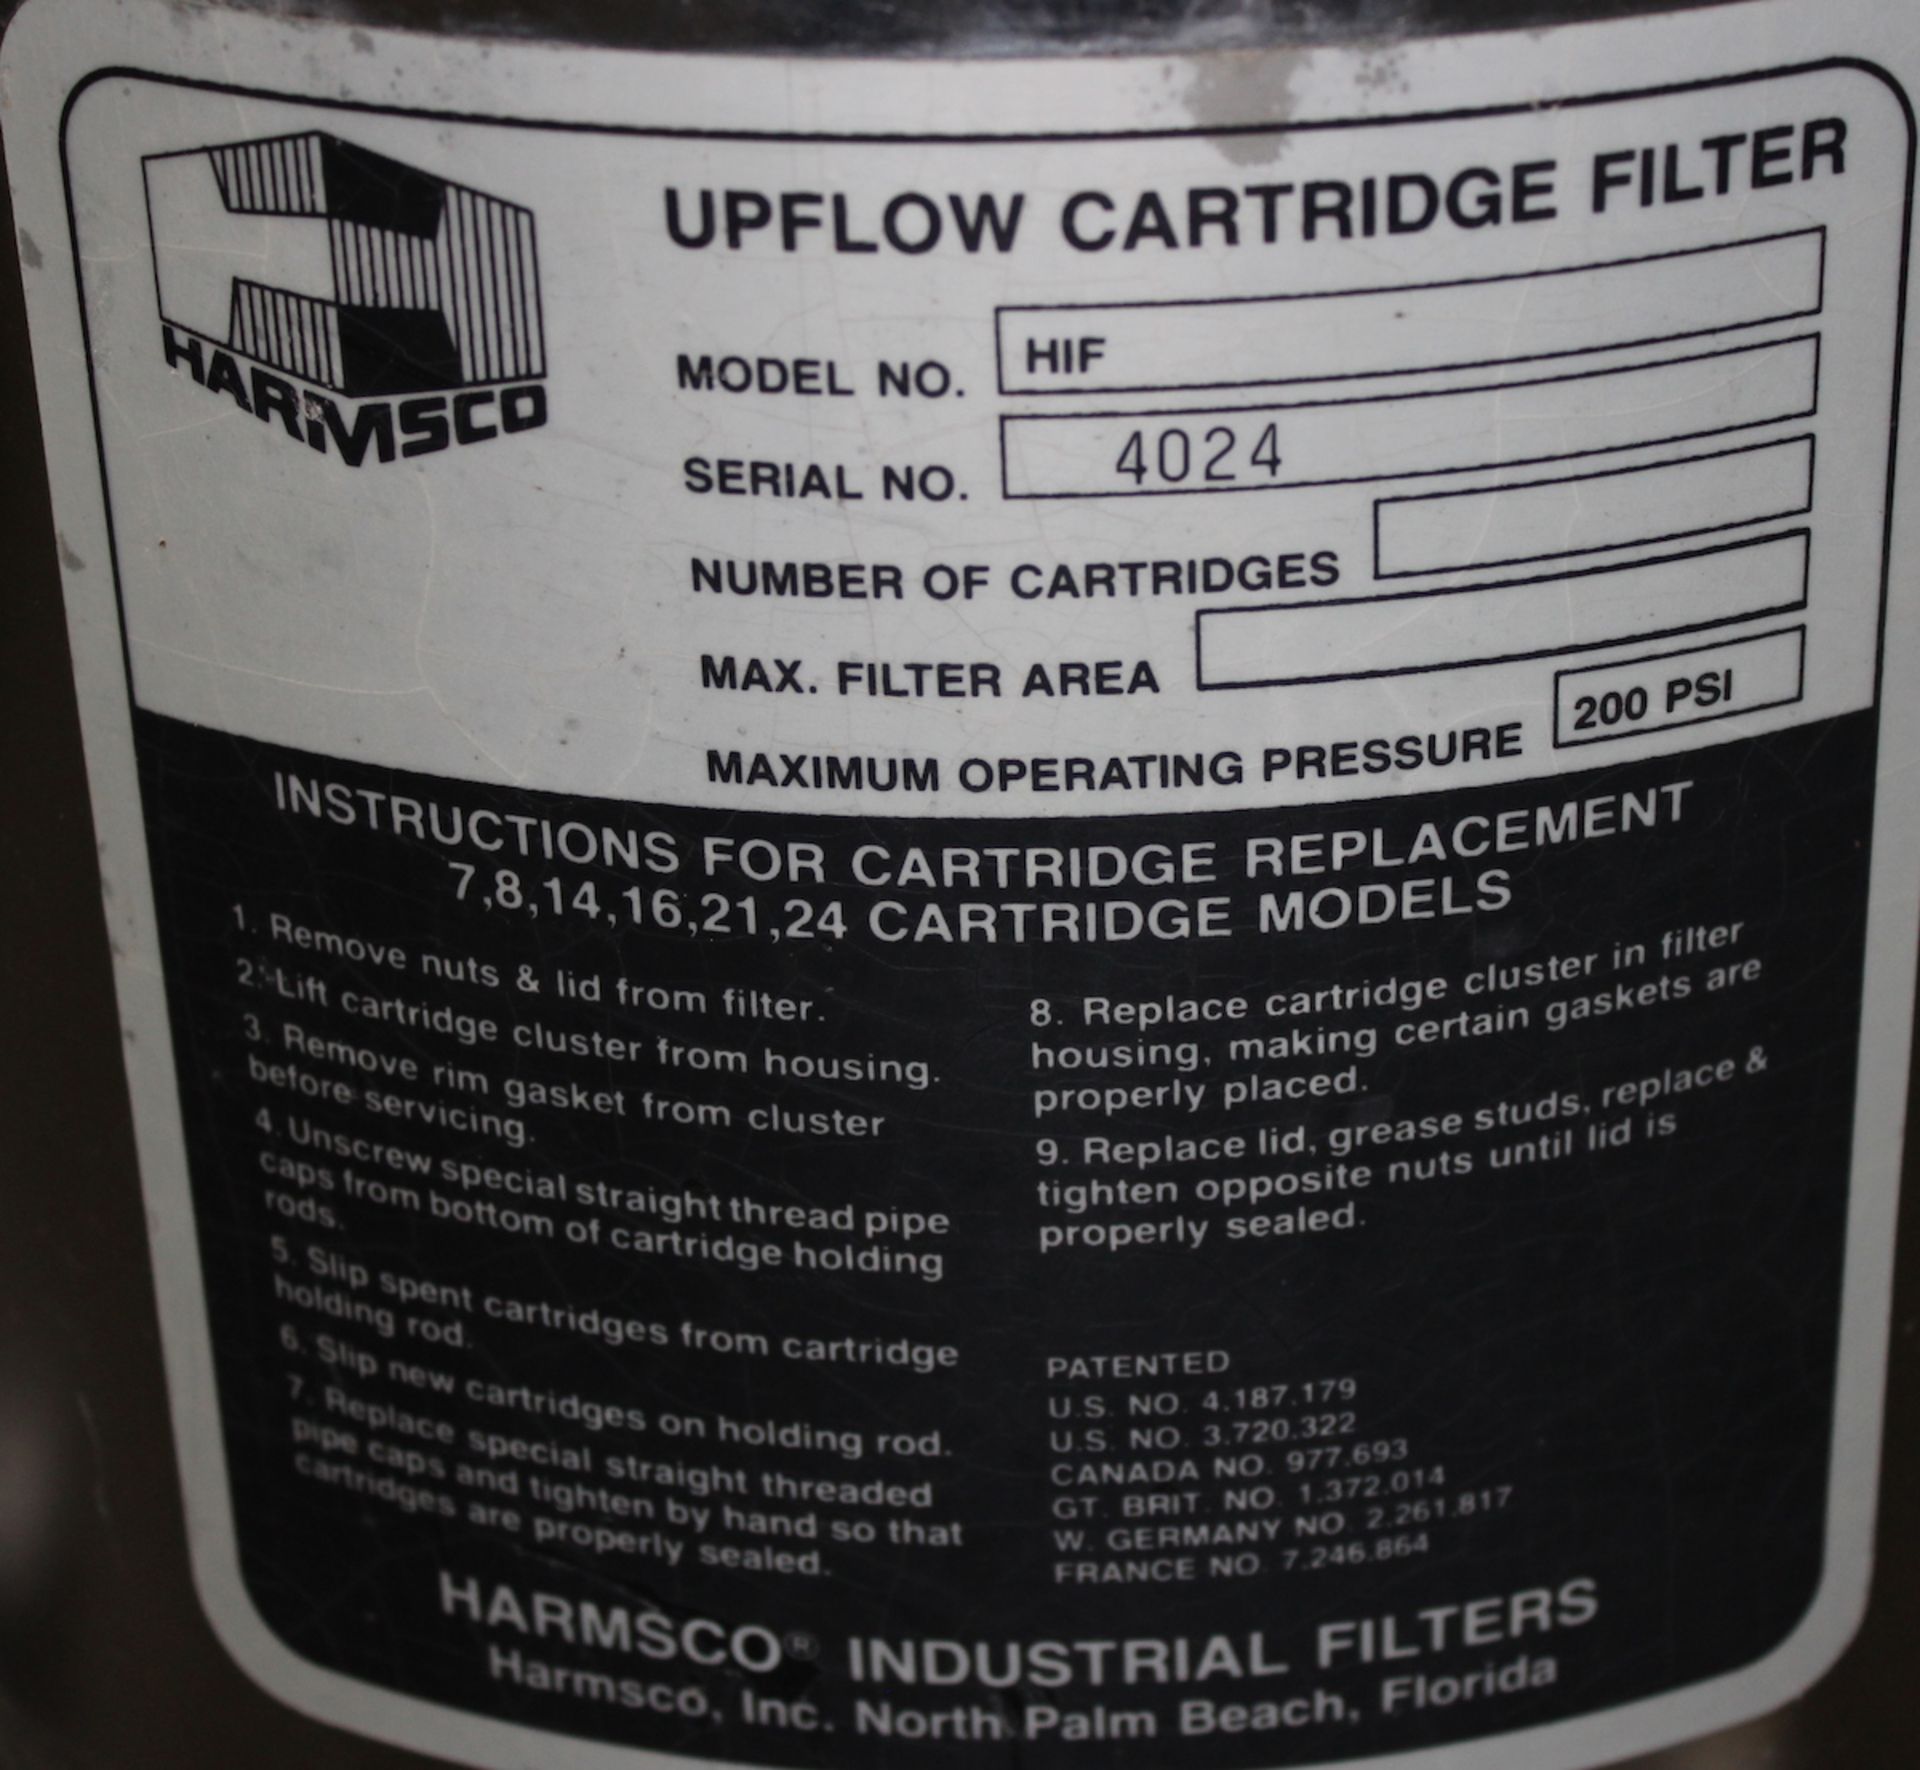 Upflow Cartridge Filters - Image 2 of 3